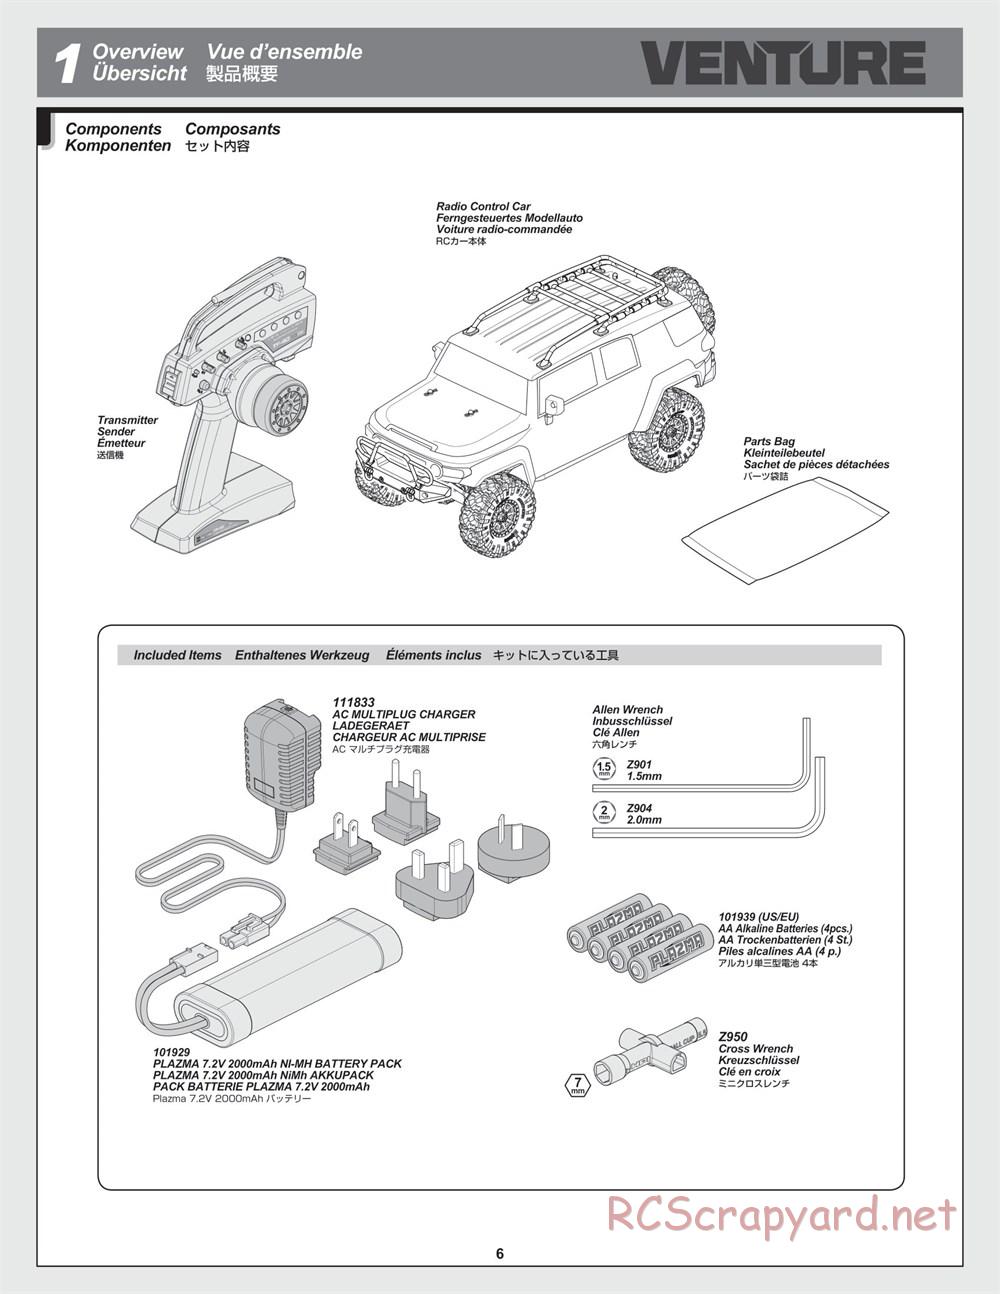 HPI - Venture Crawler - Manual - Page 6